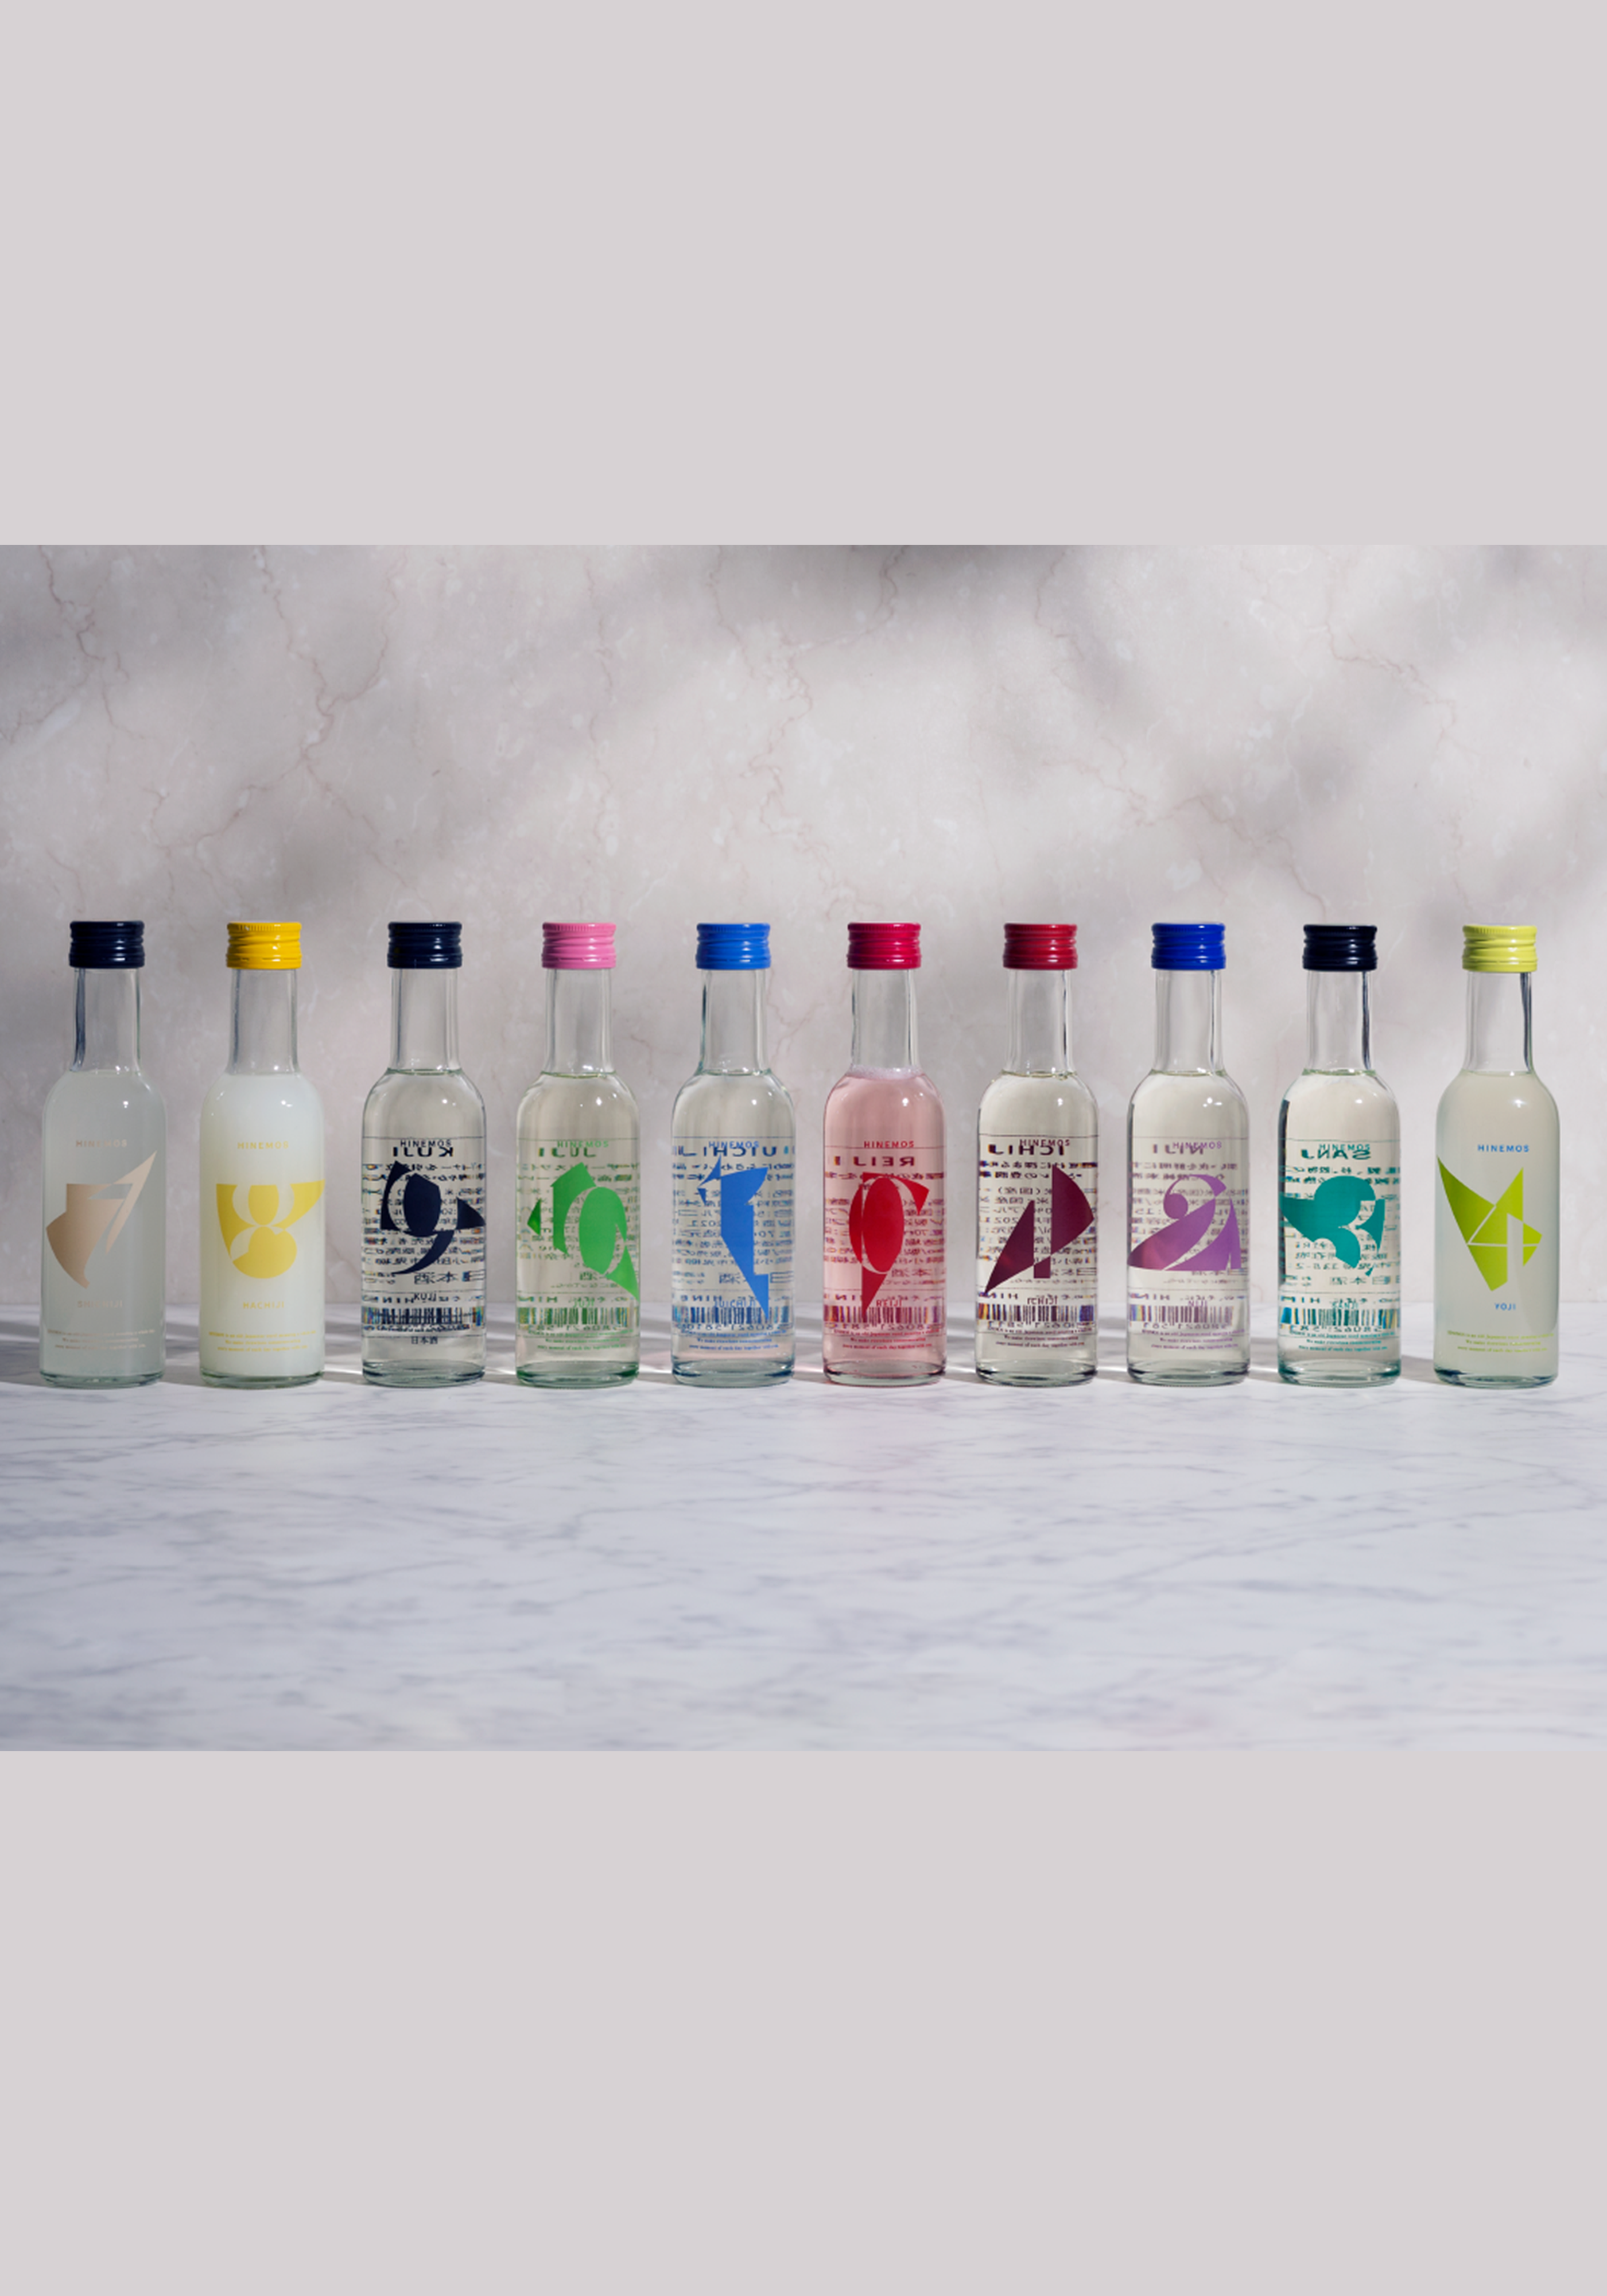 HINEMOS 10 Brand Drink Comparison Set 